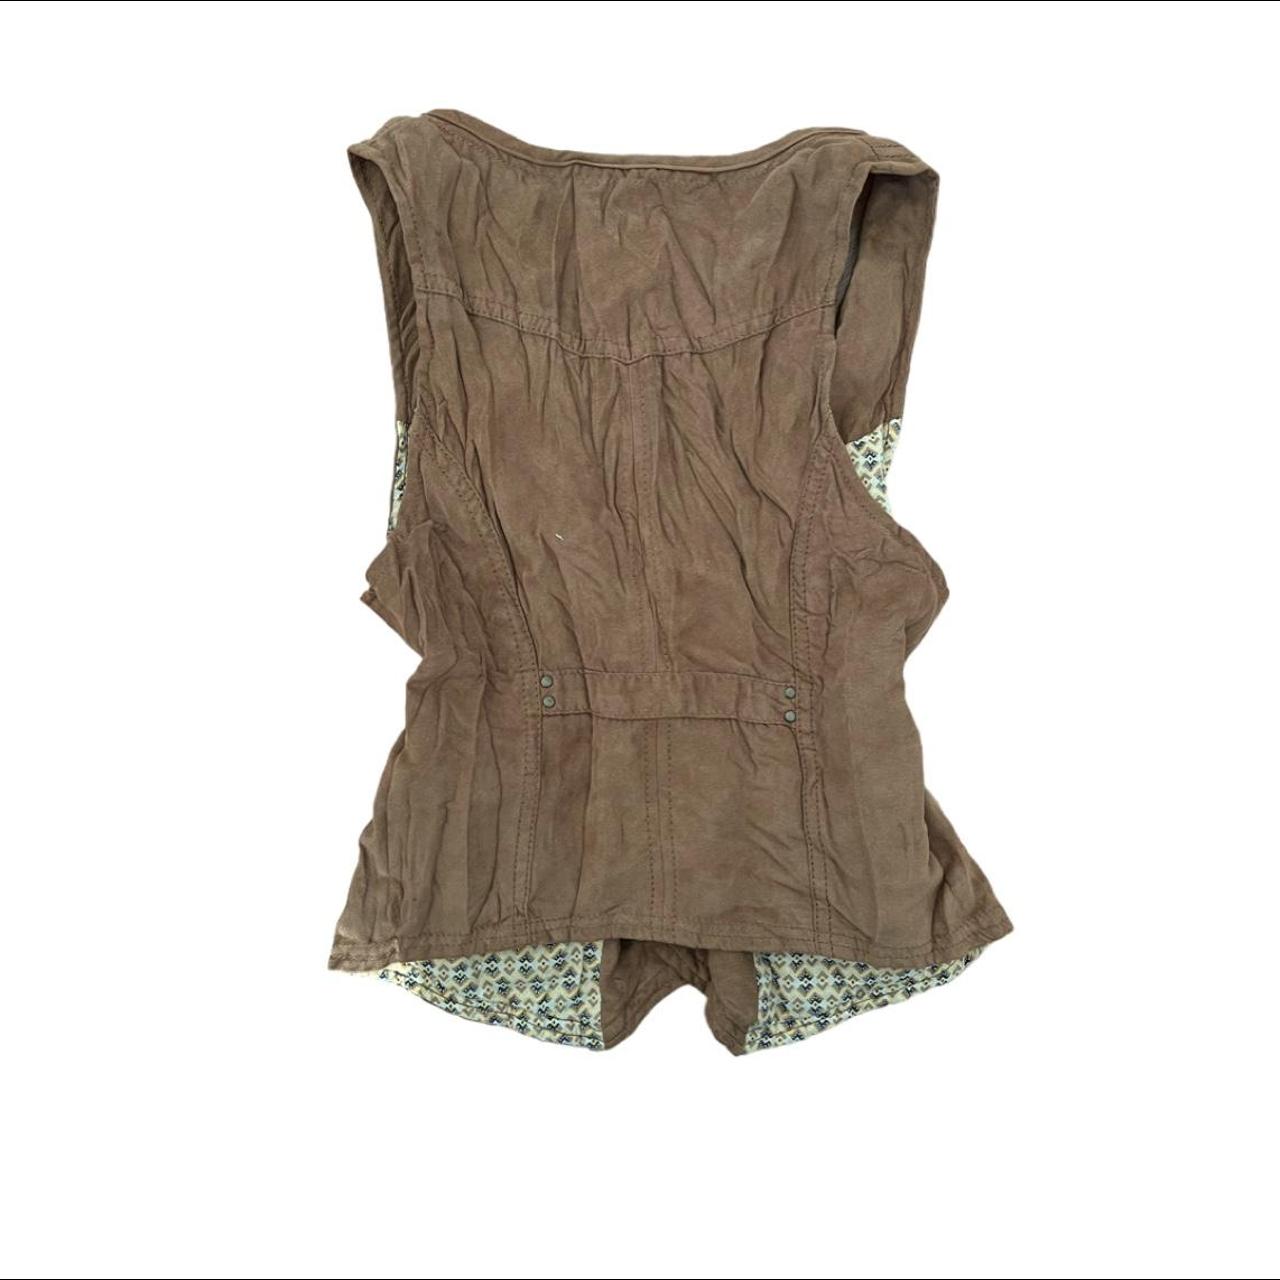 Pimkie Women's Brown and Tan Vest (4)